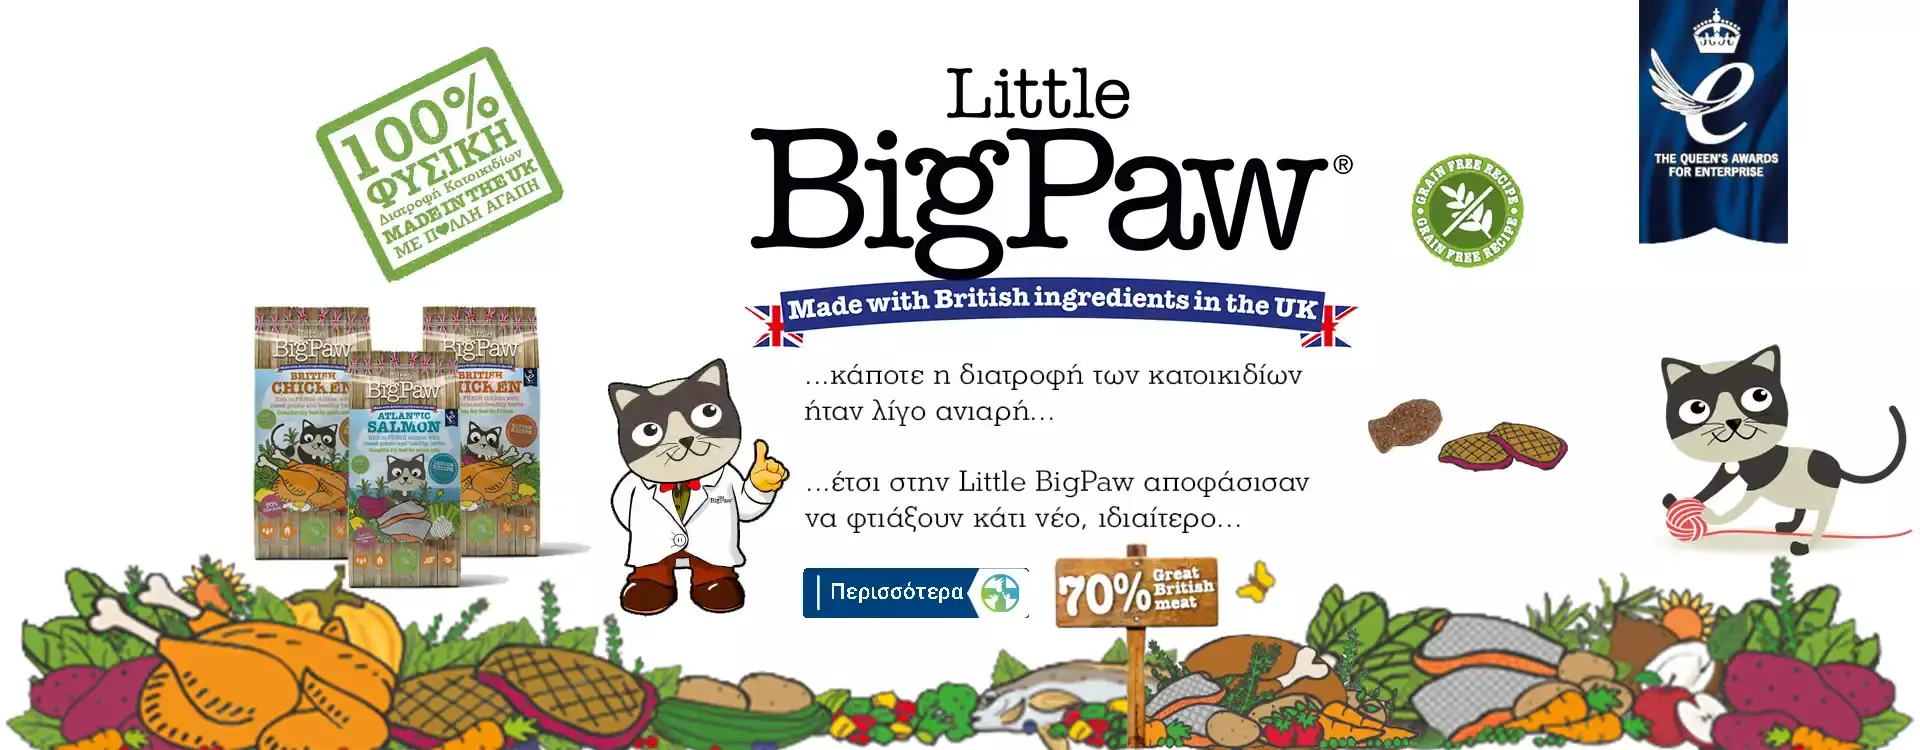 little bigpaw cat food slider